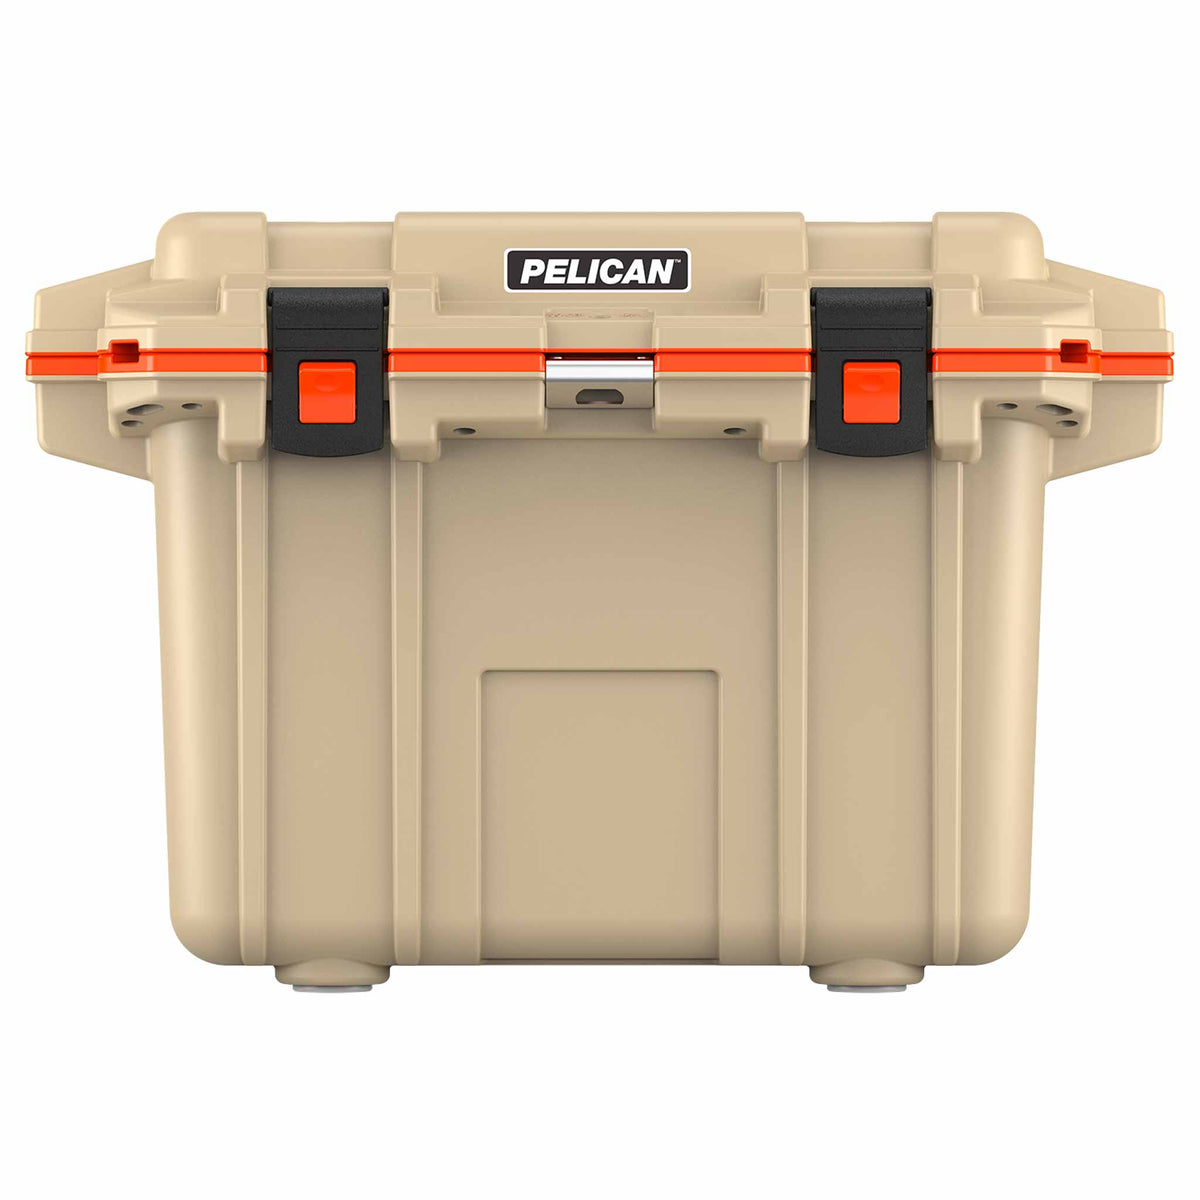 50QT Pelican Elite Cooler in Tan/Orange